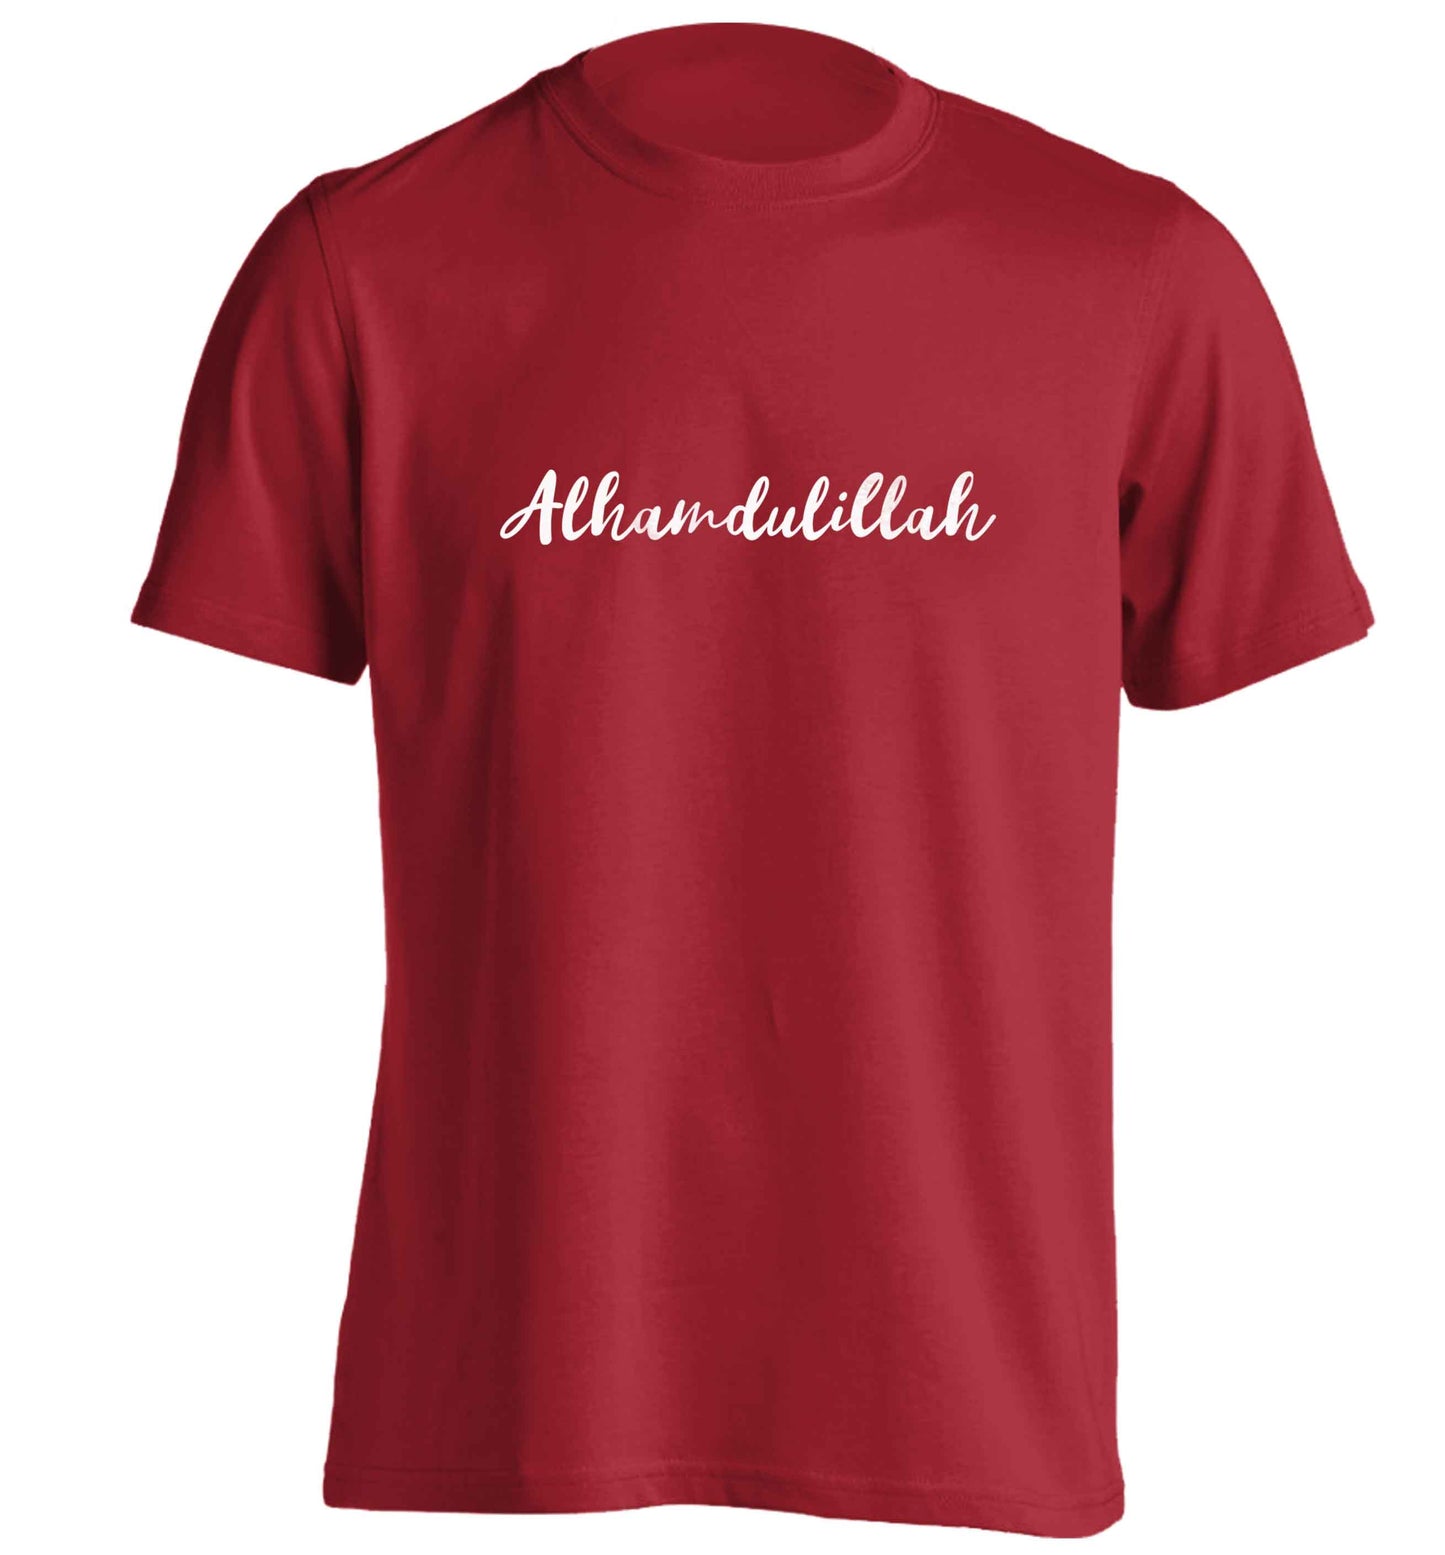 alhamdulillah adults unisex red Tshirt 2XL